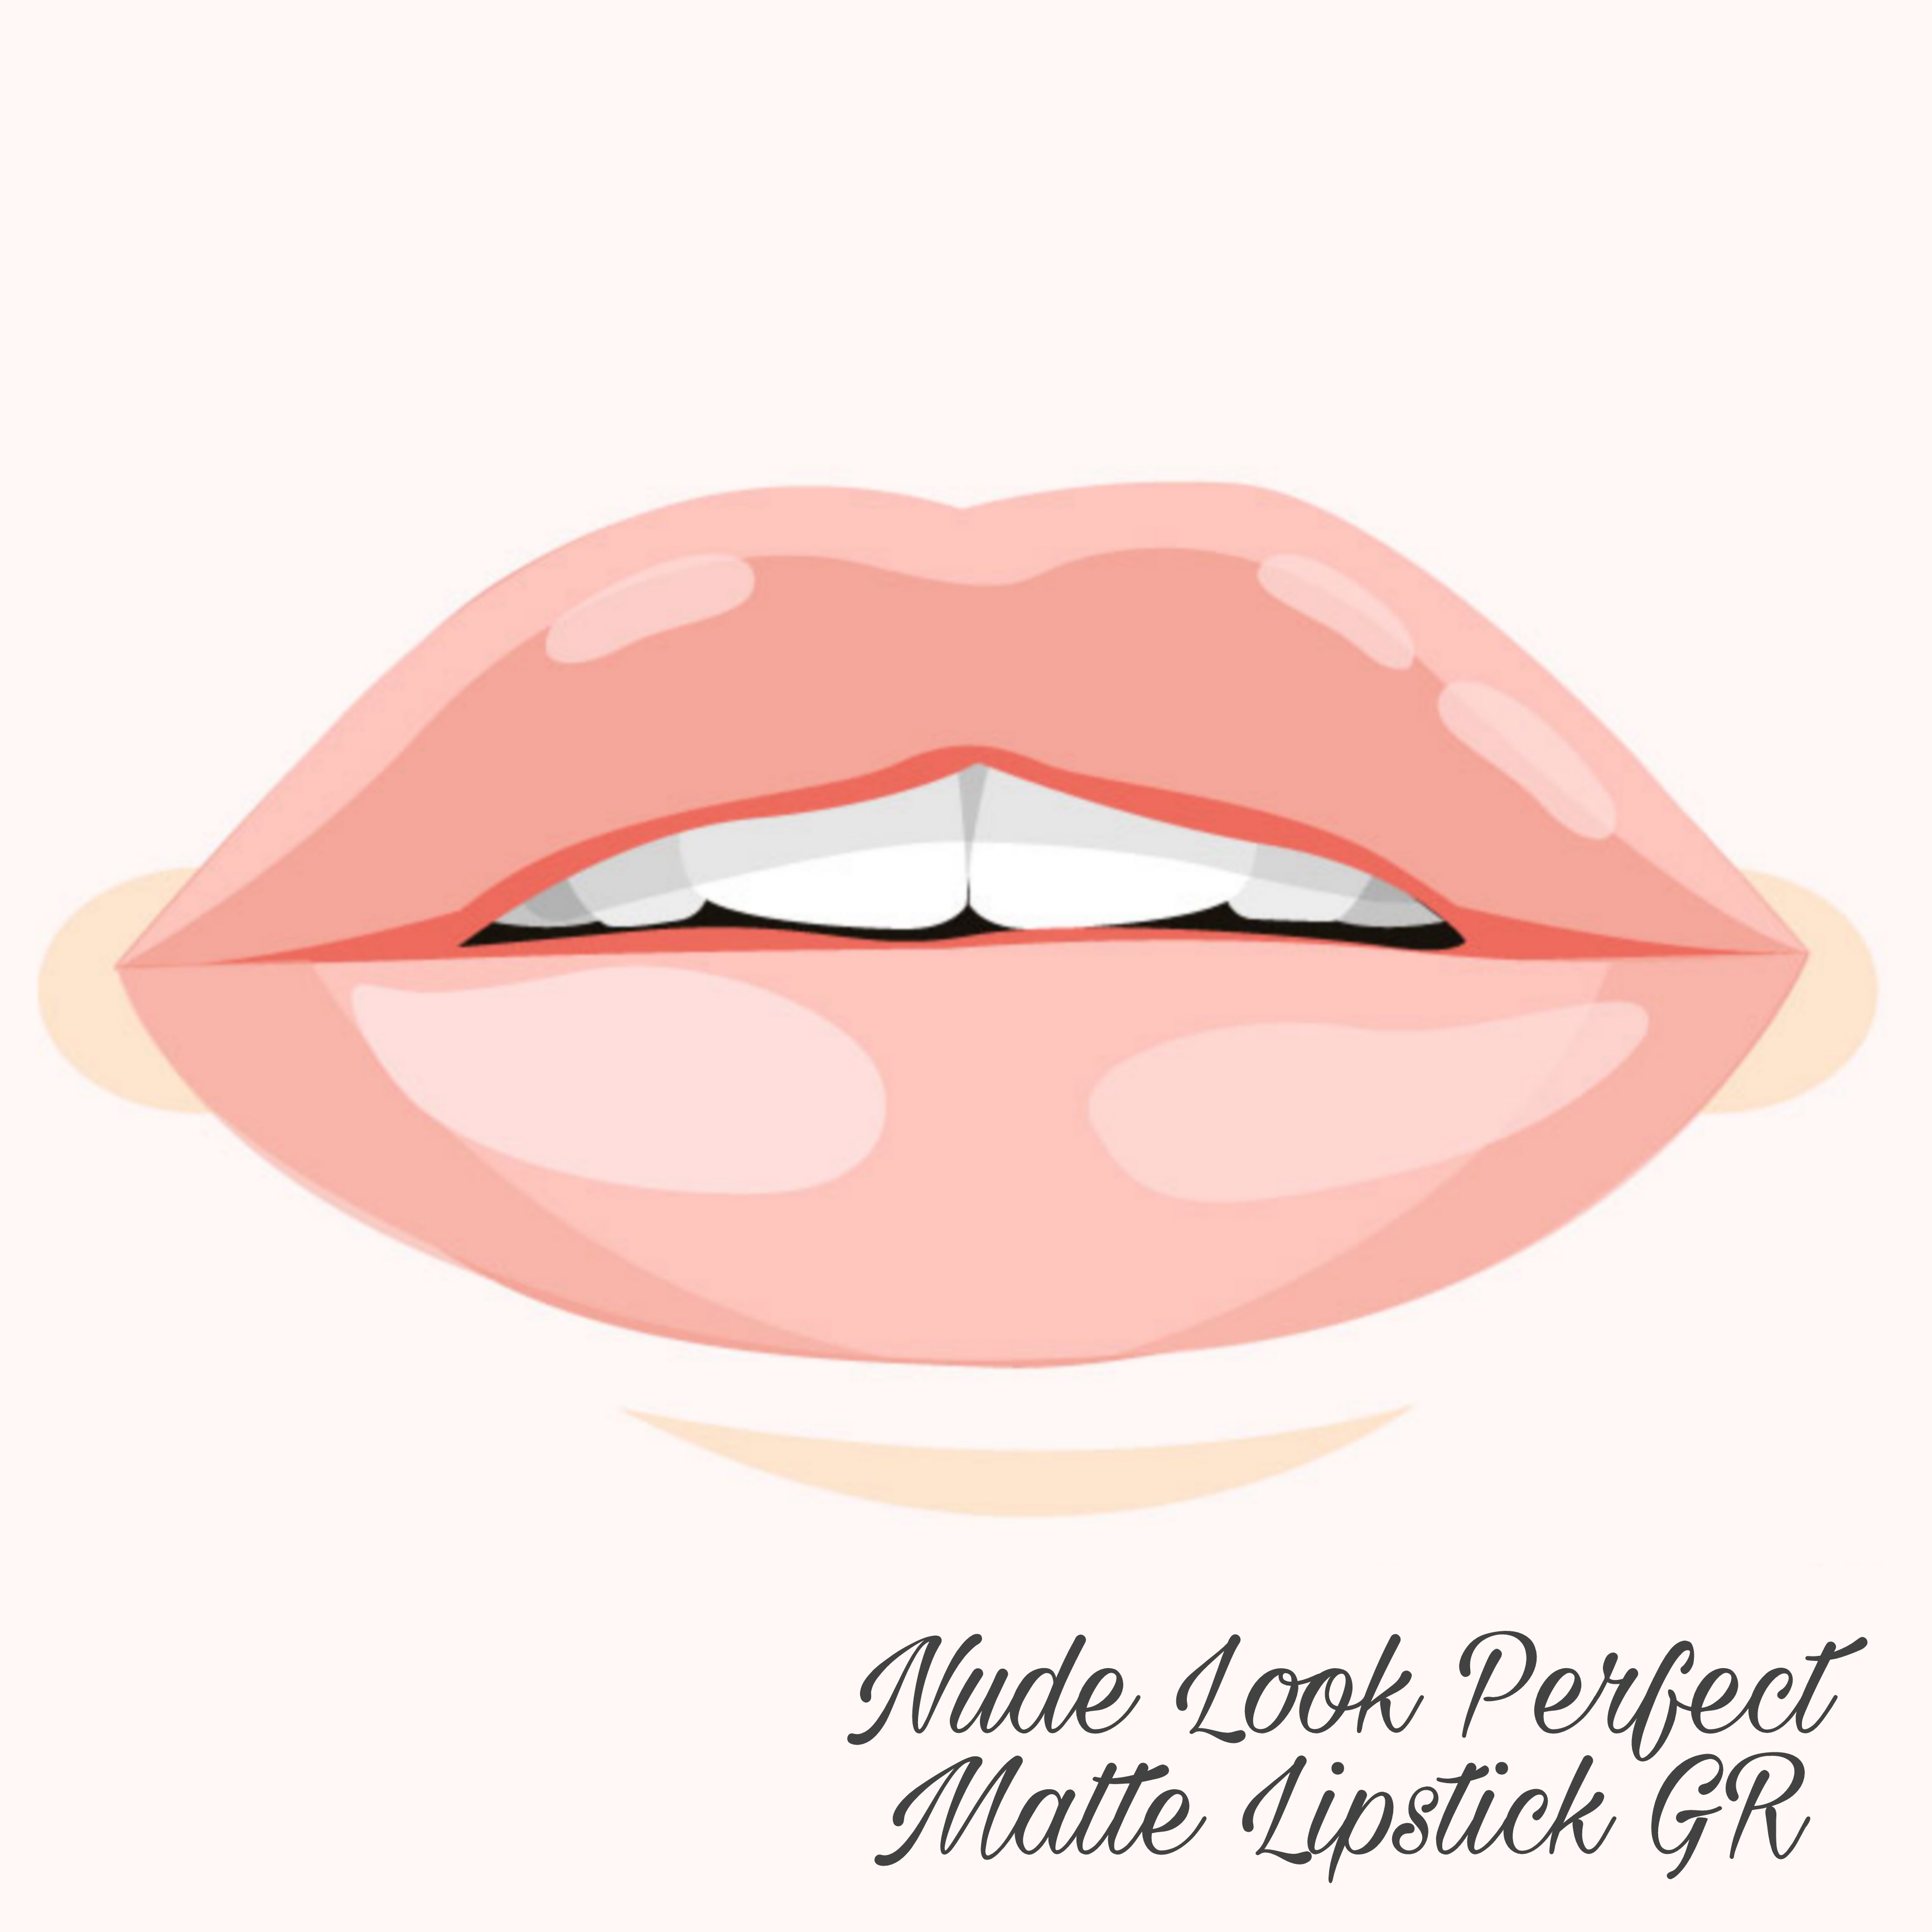 Nude Look Perfect Matte Lipstick GR